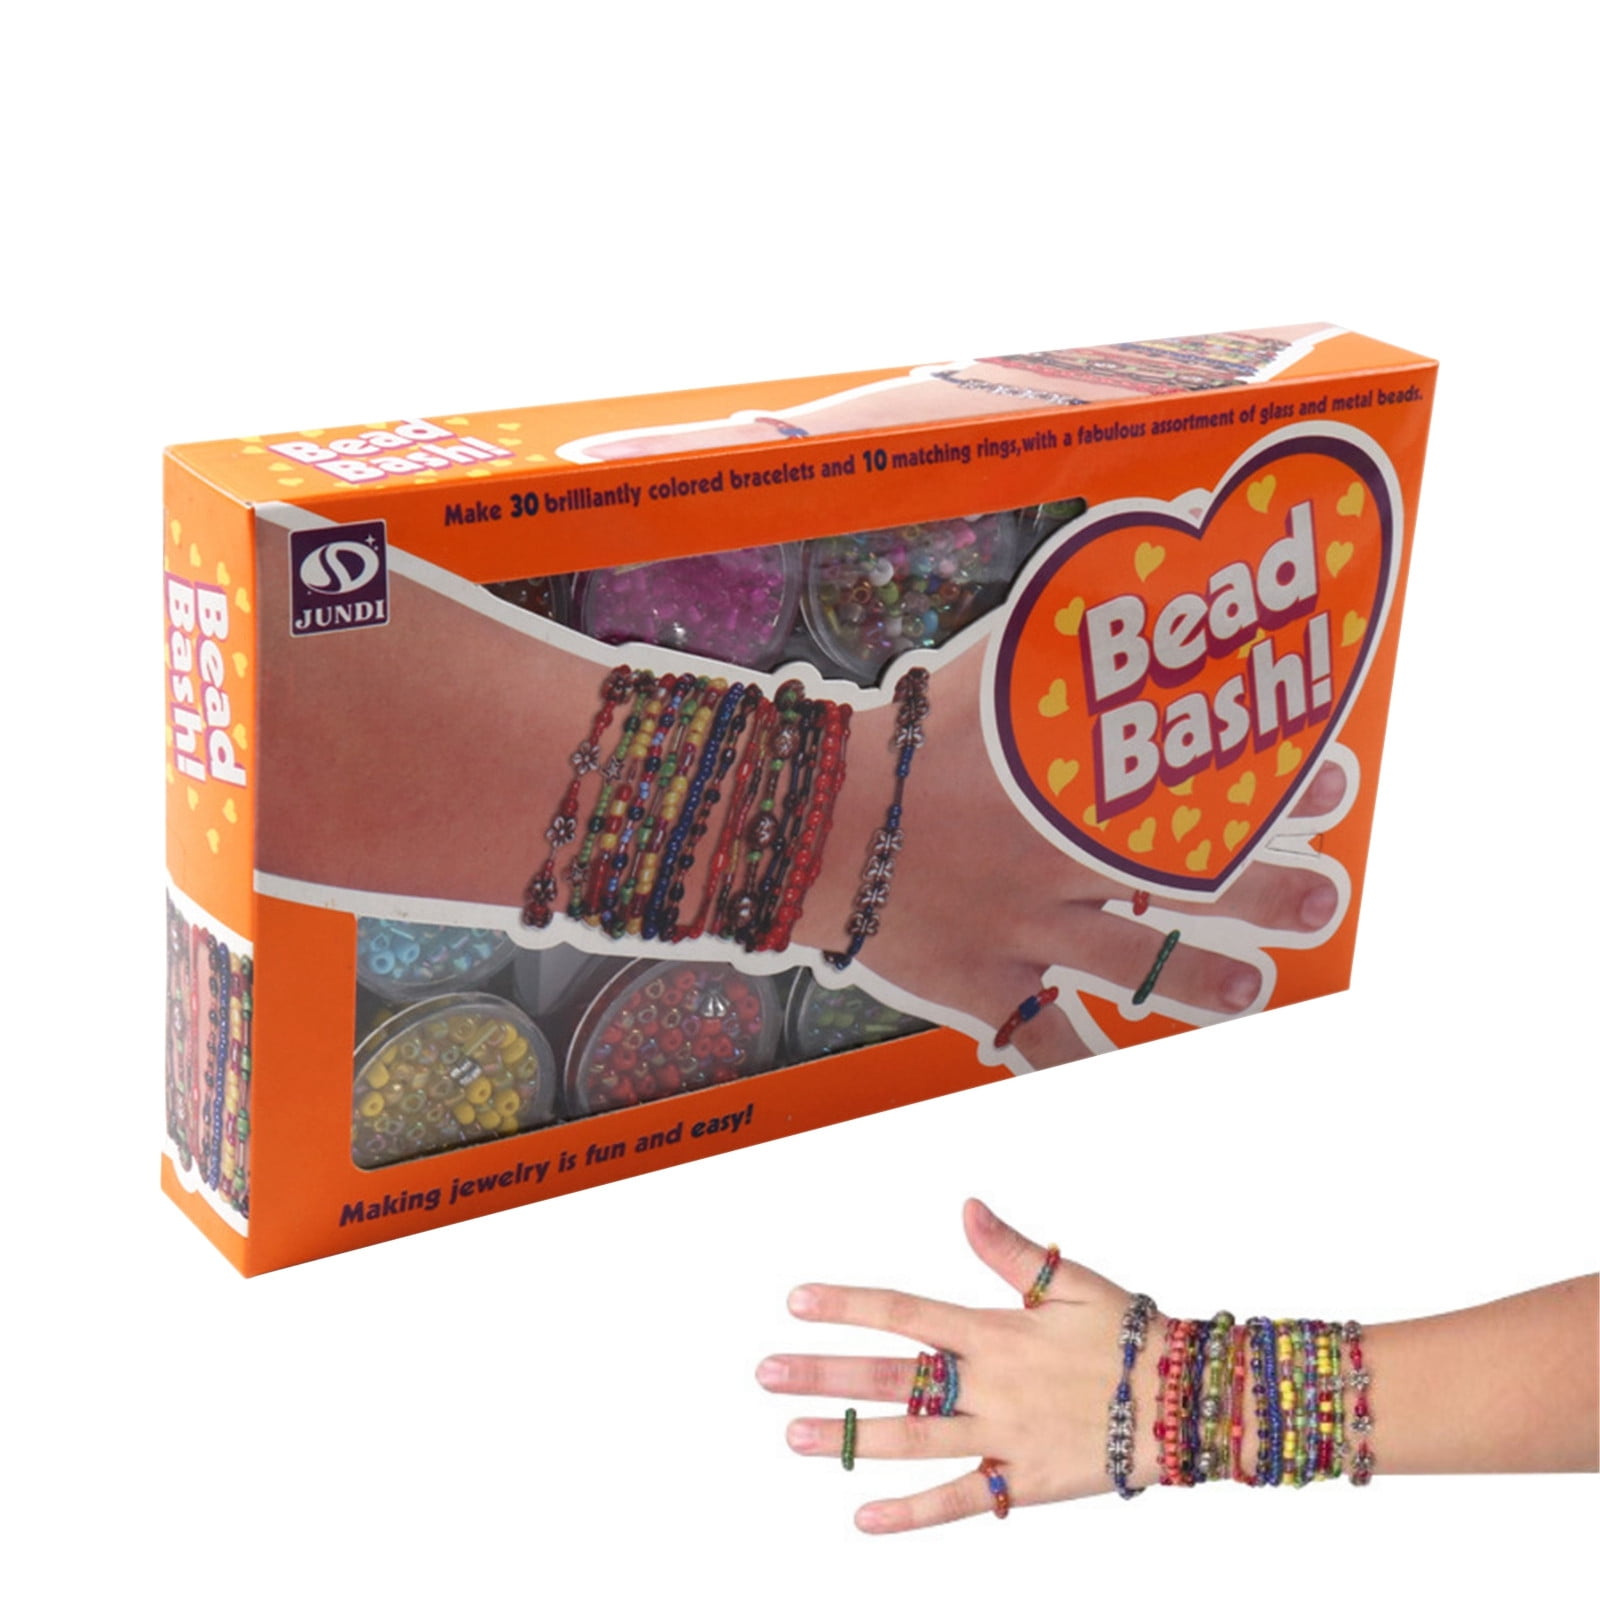 Easy Friendship Bracelets with Cardboard Loom - Red Ted Art - Kids